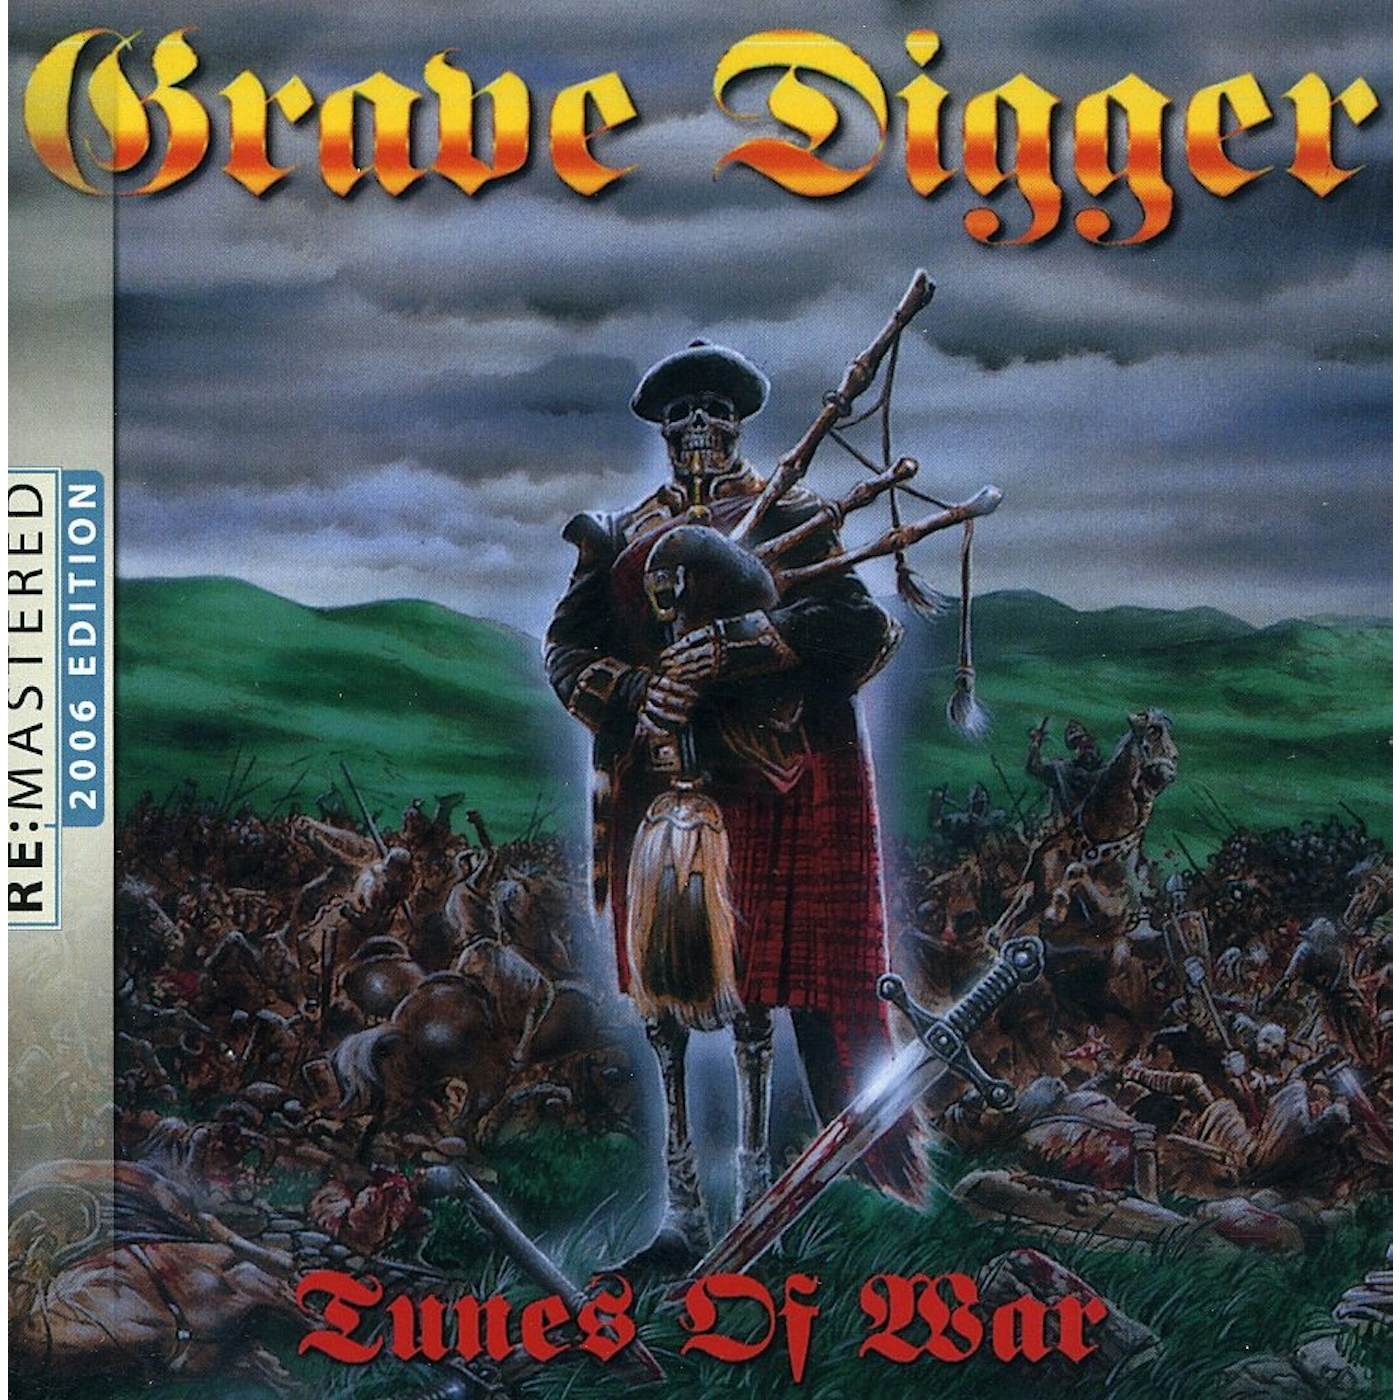 Grave Digger TUNES OF WAR CD